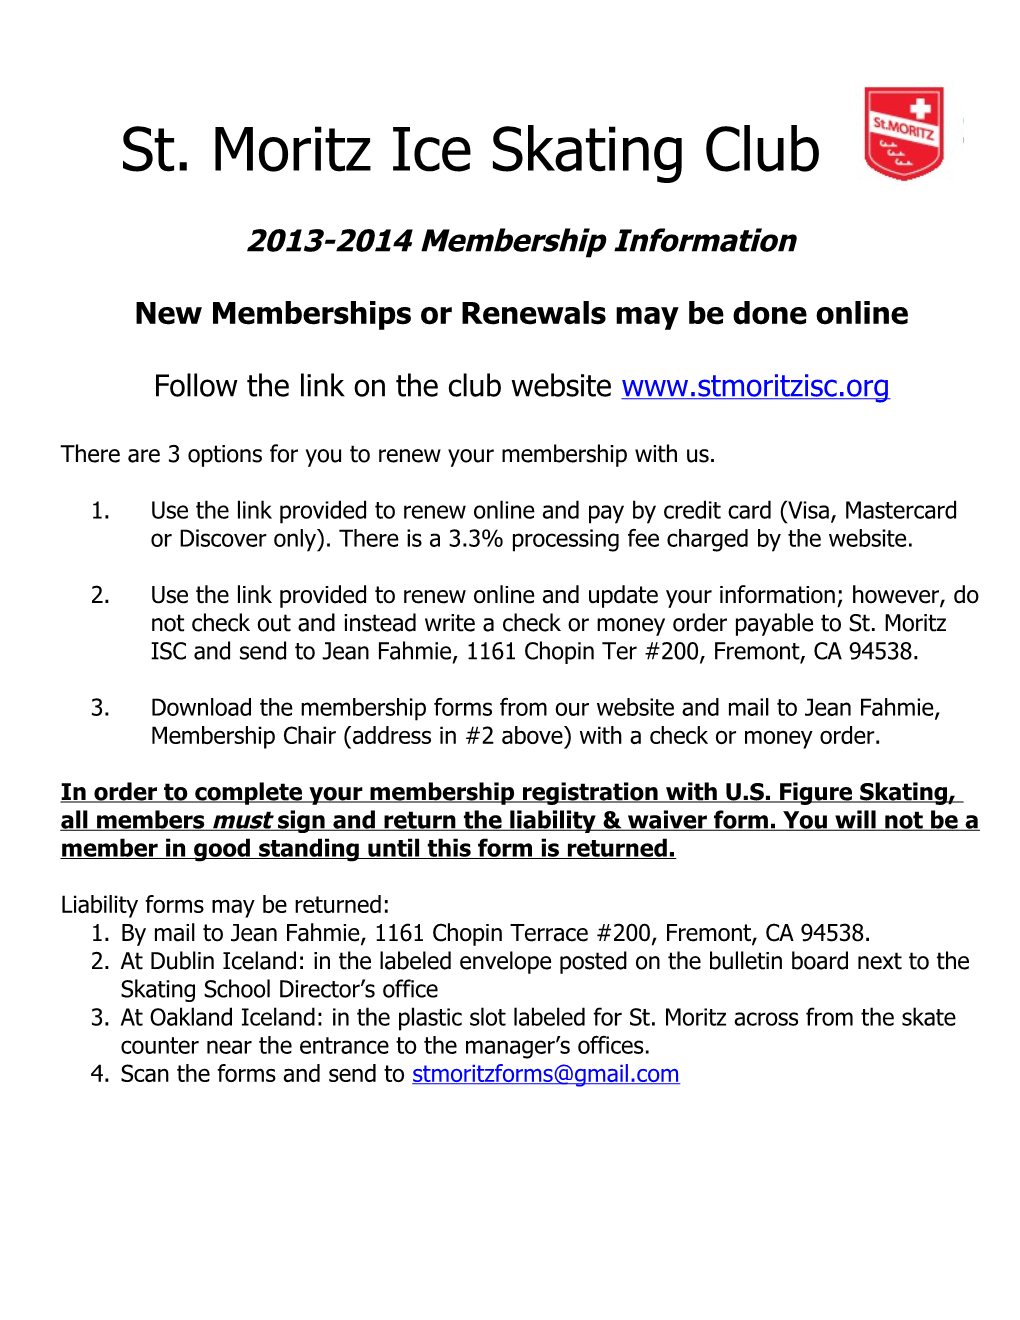 National Skating Week Membership Drive